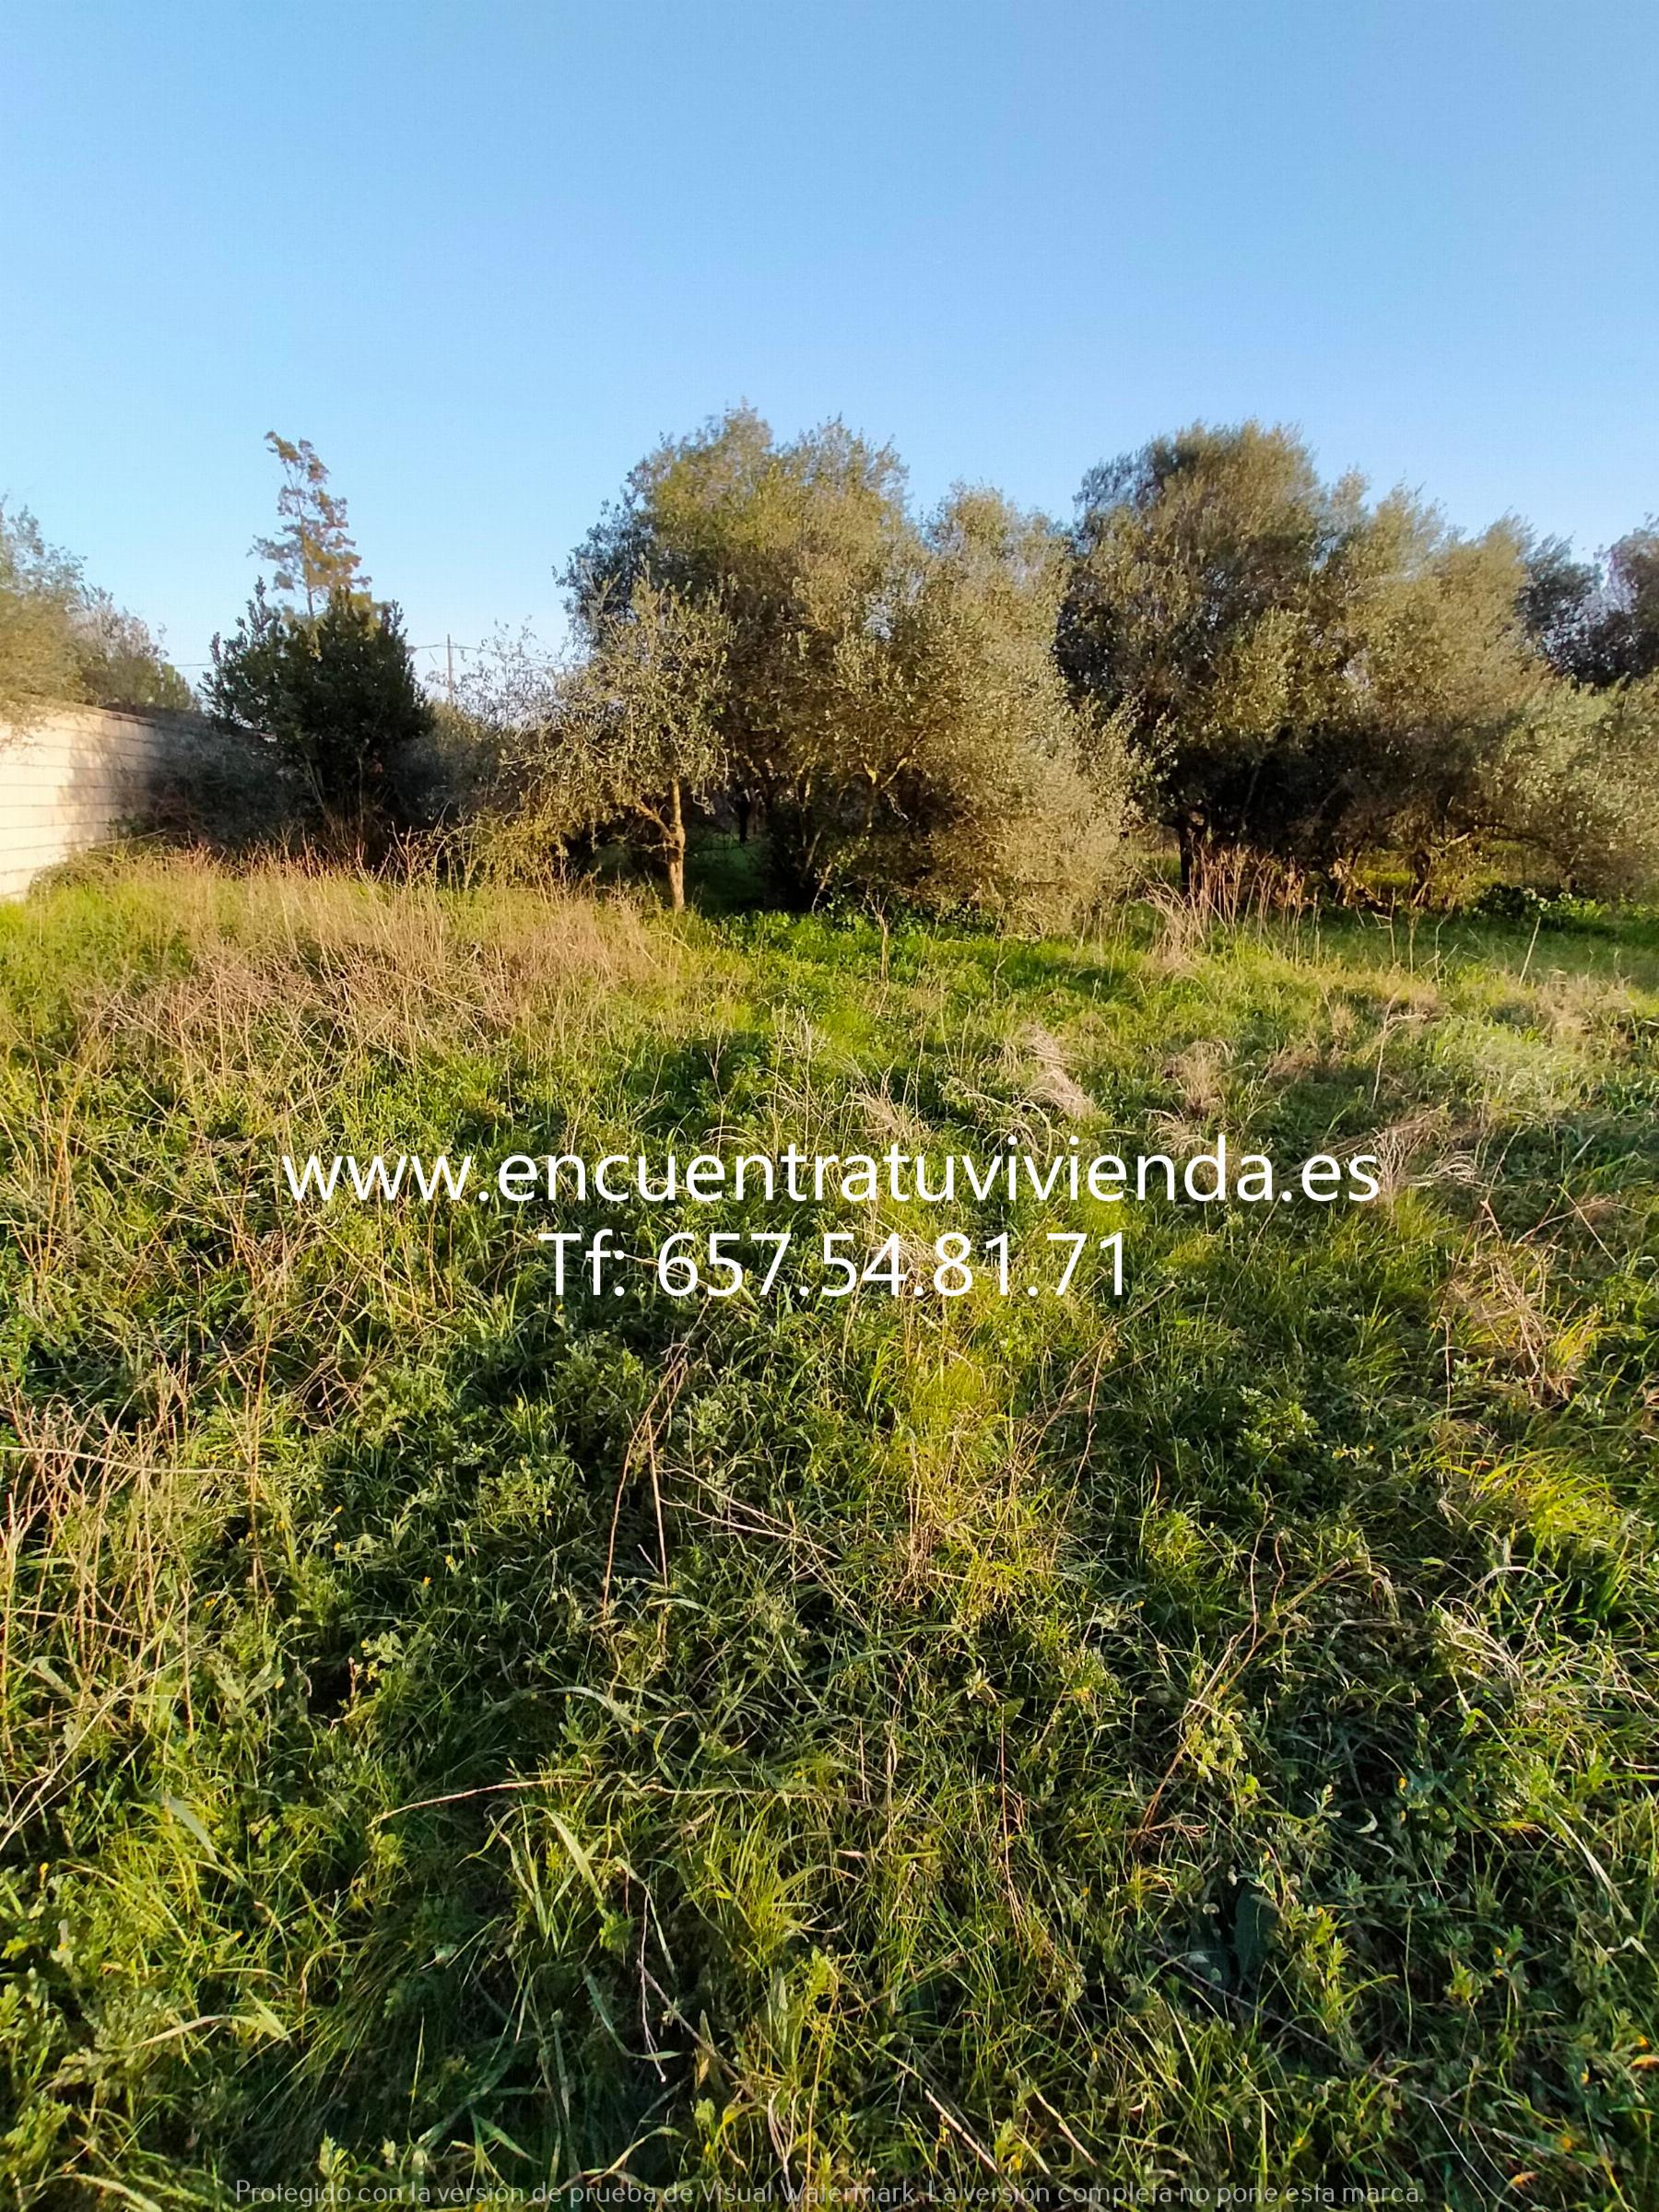 For sale of rural property in Chiclana de la Frontera